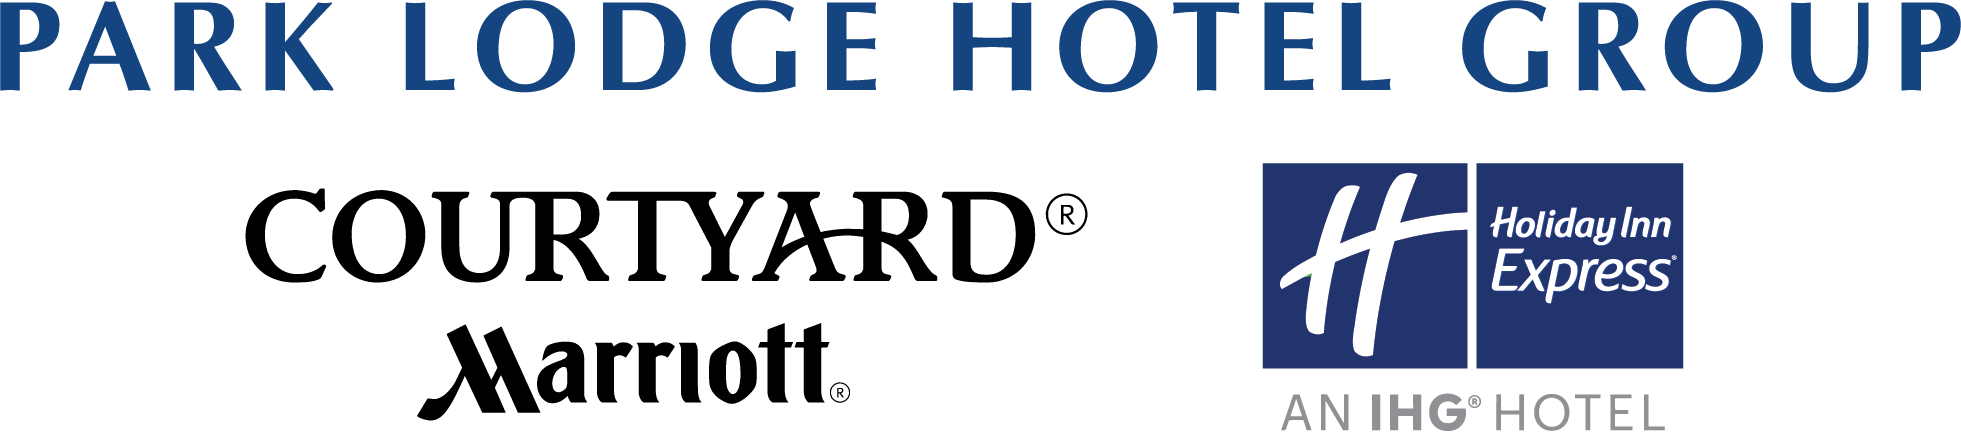 Park Lodge Hotel Group logo